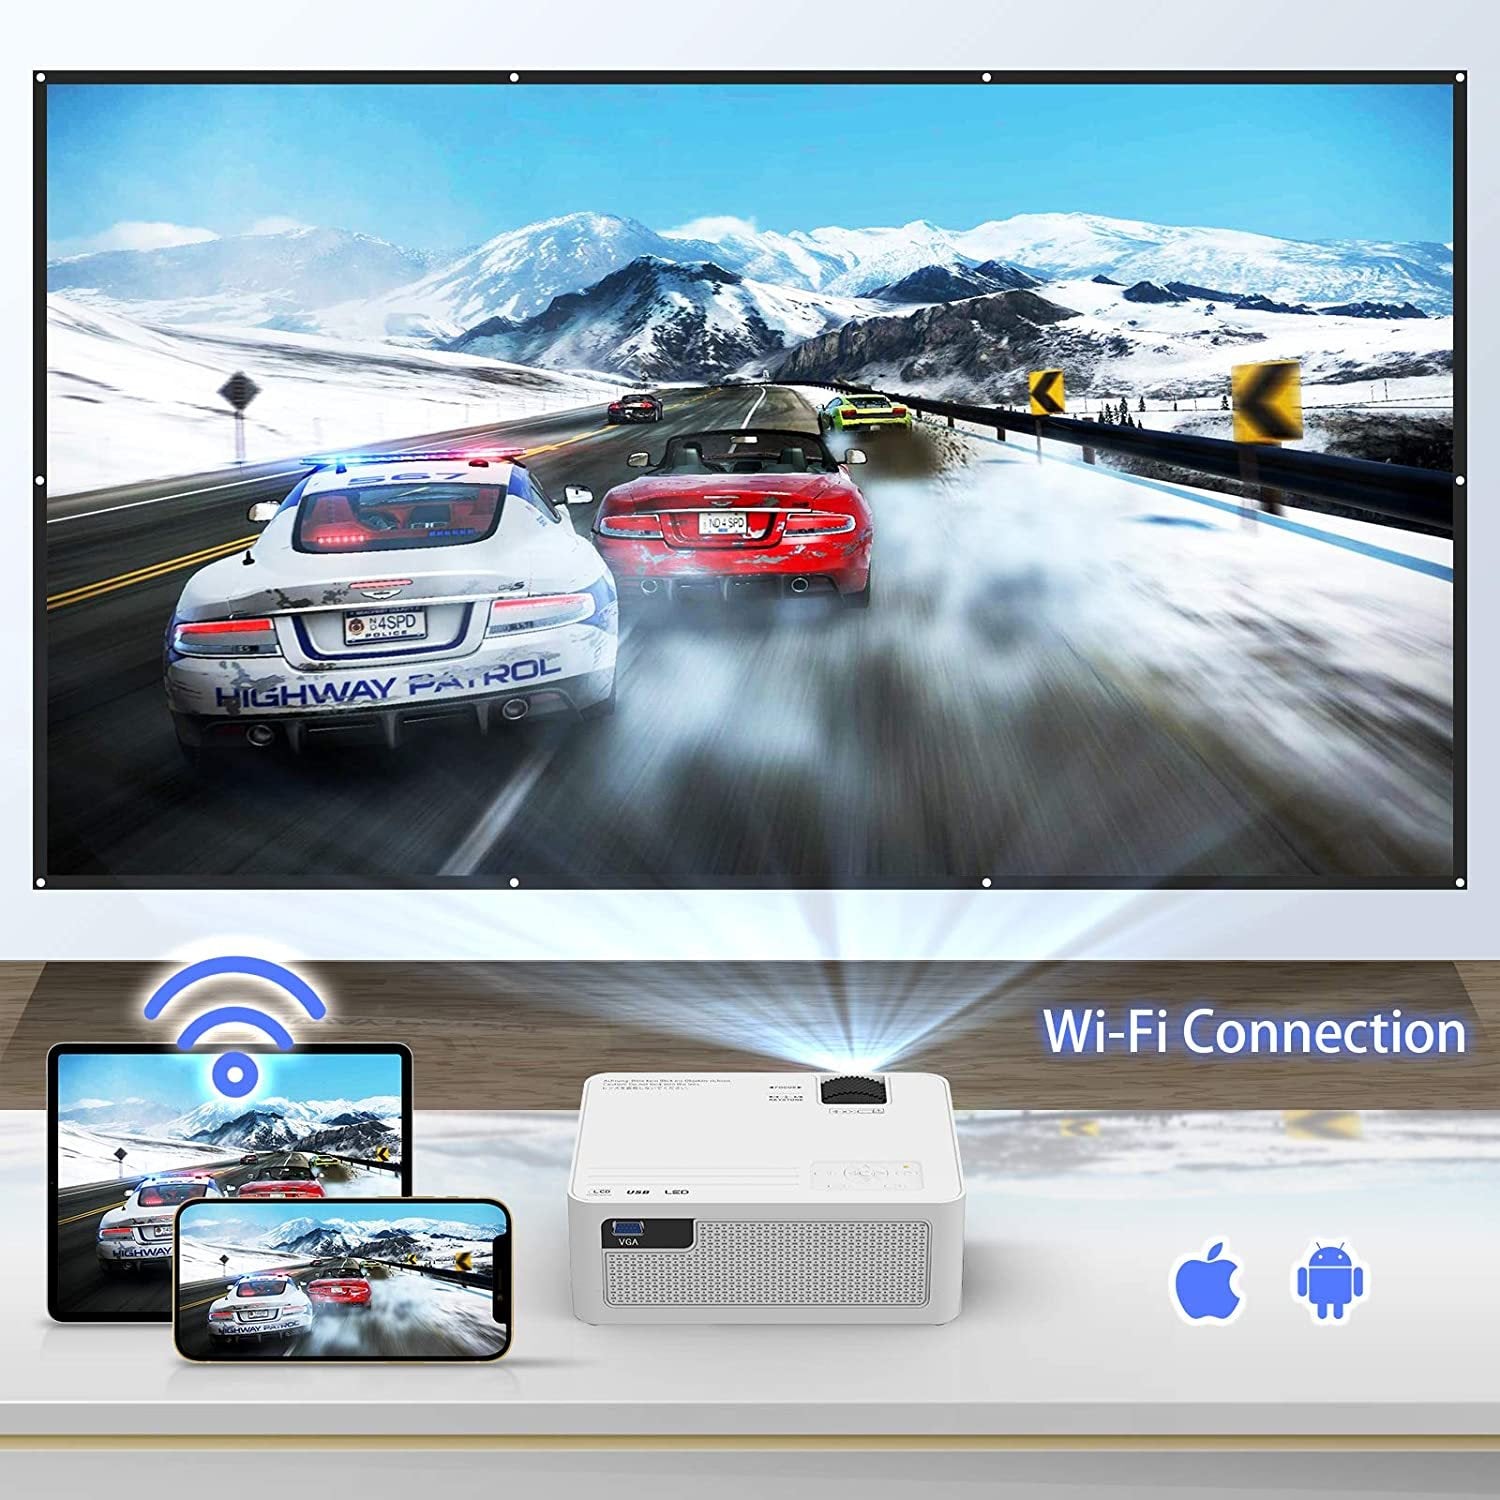 DOOSL 5G Wi-Fi Projector, 14000 Lumen Native 1080P HD Portable Movie Projector with Bluetooth & Remote, 120-inch Screen Included, Sync Smartphone, Compatible with TV Stick, PS4, HDMI, VGA, Xbox